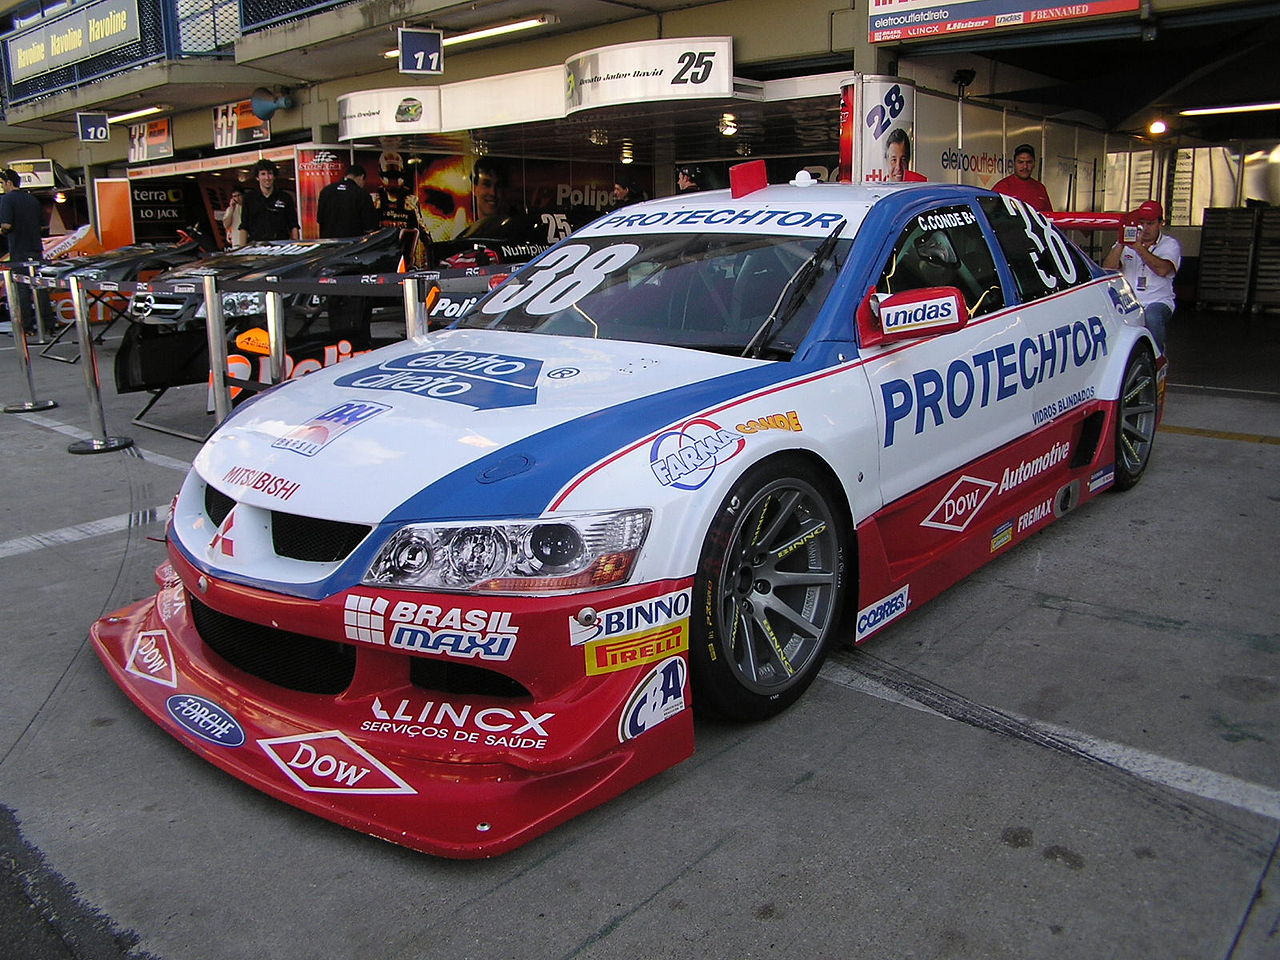 File:Stock Car V8 Brasil team NASCAR.jpg - Wikimedia Commons